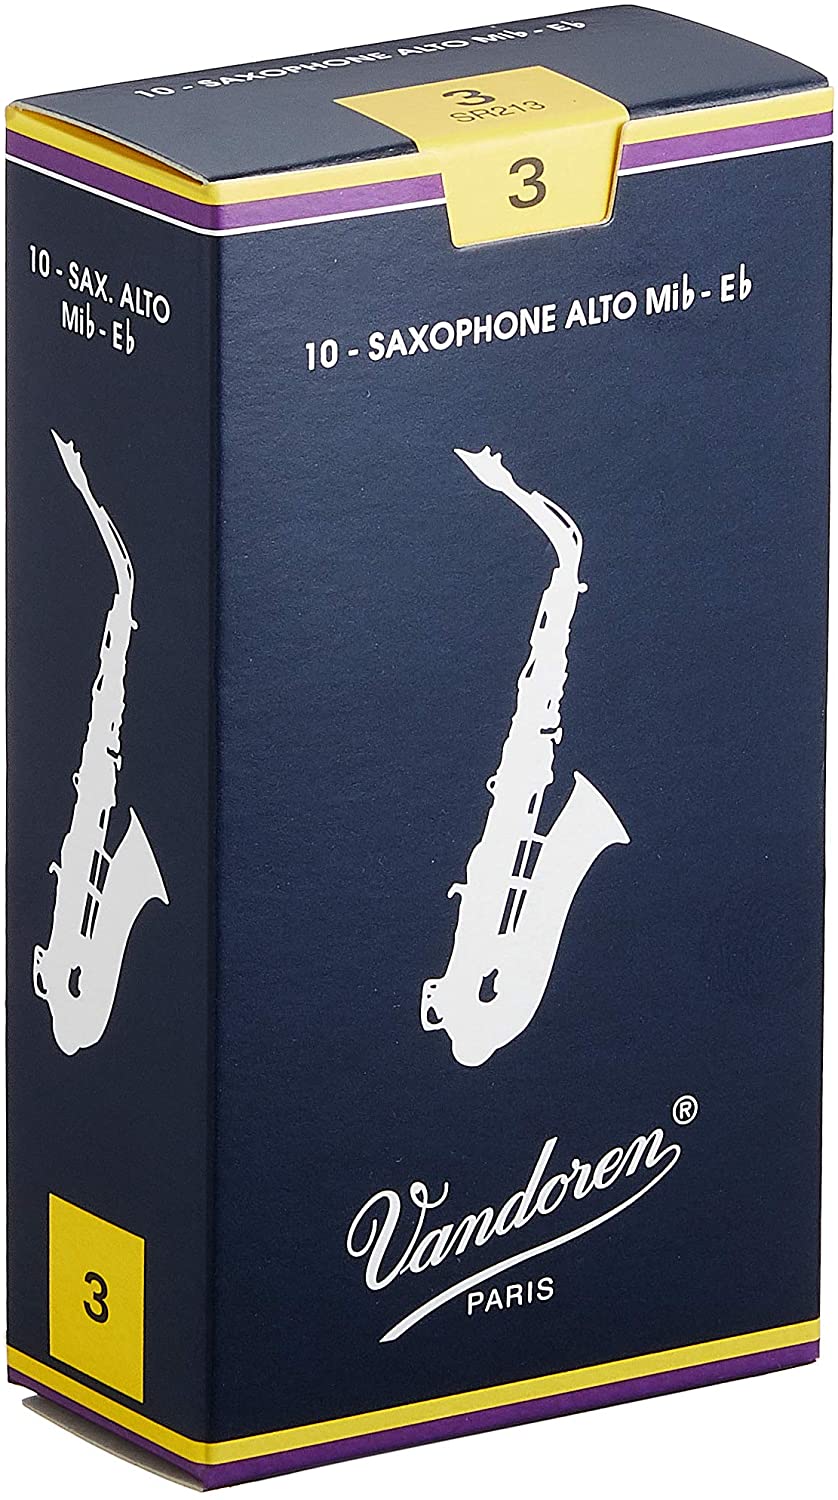 Vandoren Alto Saxophone Reeds - Box of 10 (Choose Strength)